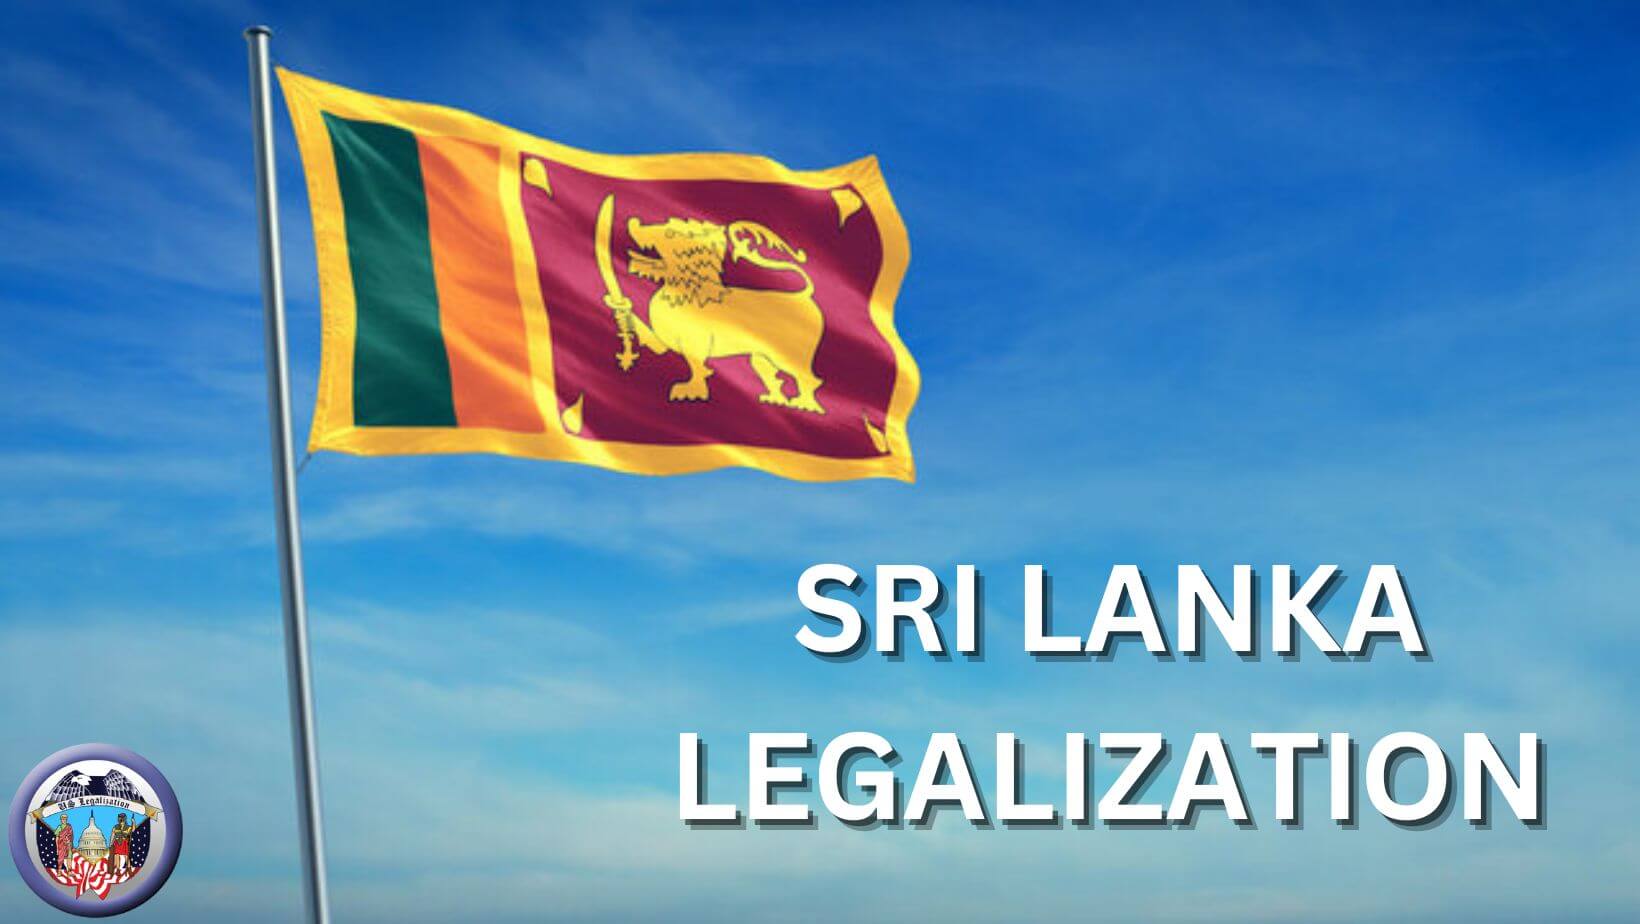 Sri Lanka legalization